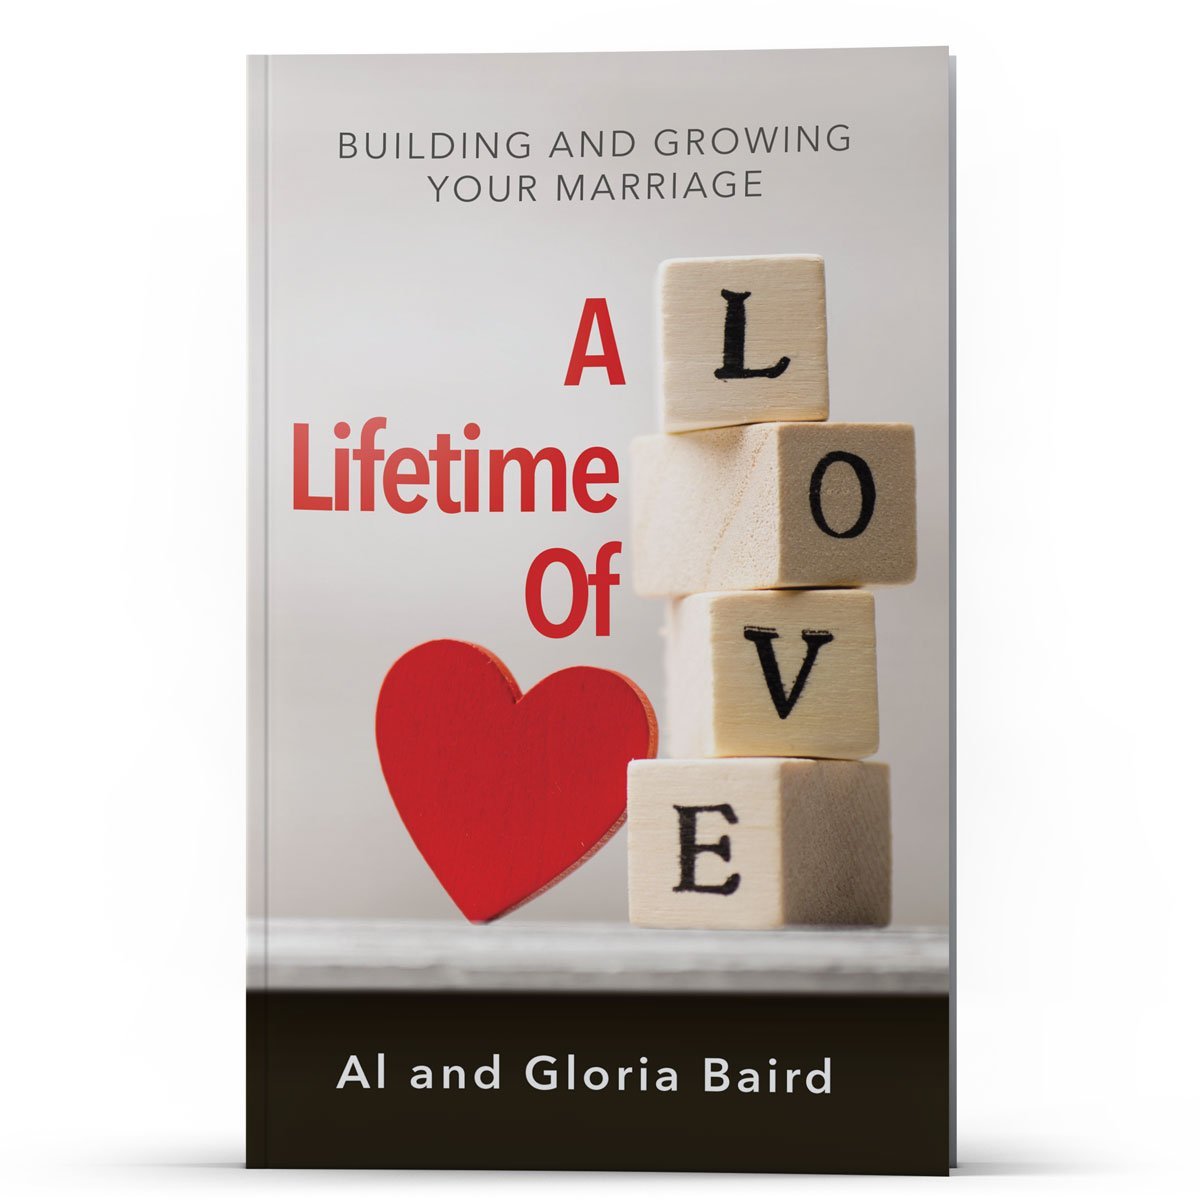 A Lifetime of Love - Illumination Publishers